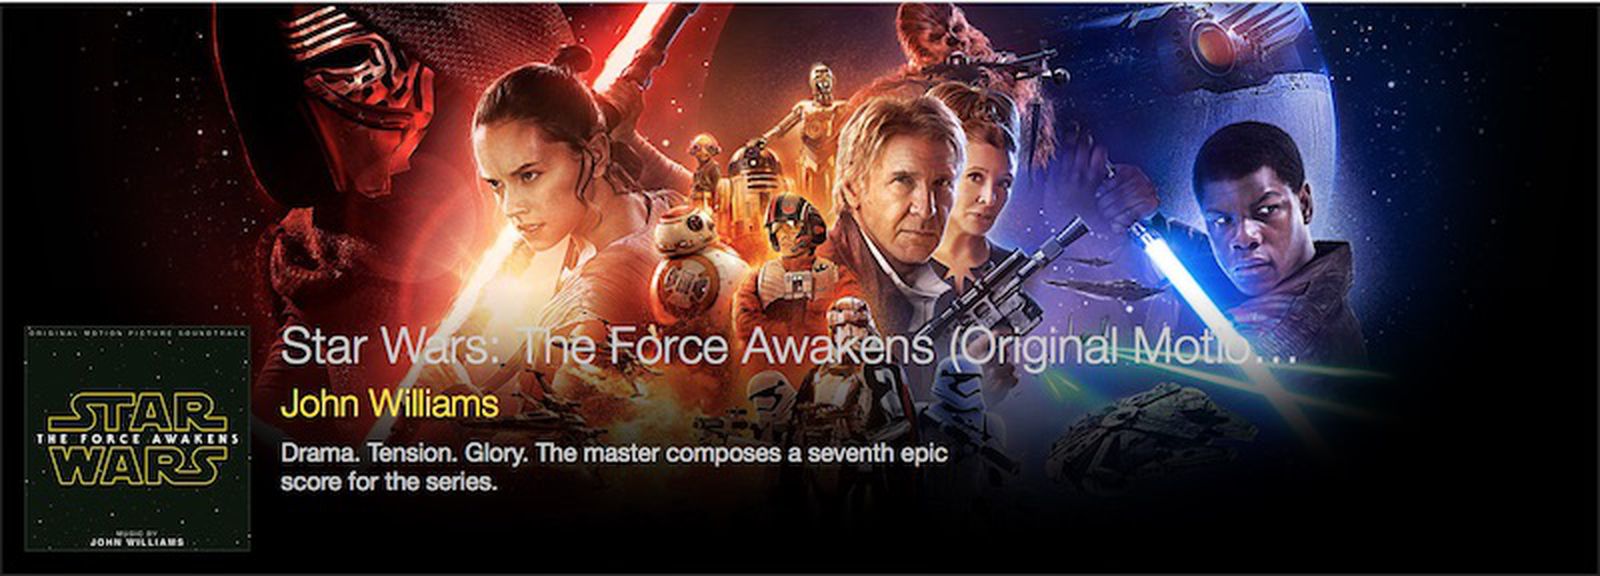 star wars the force awakens movie invite